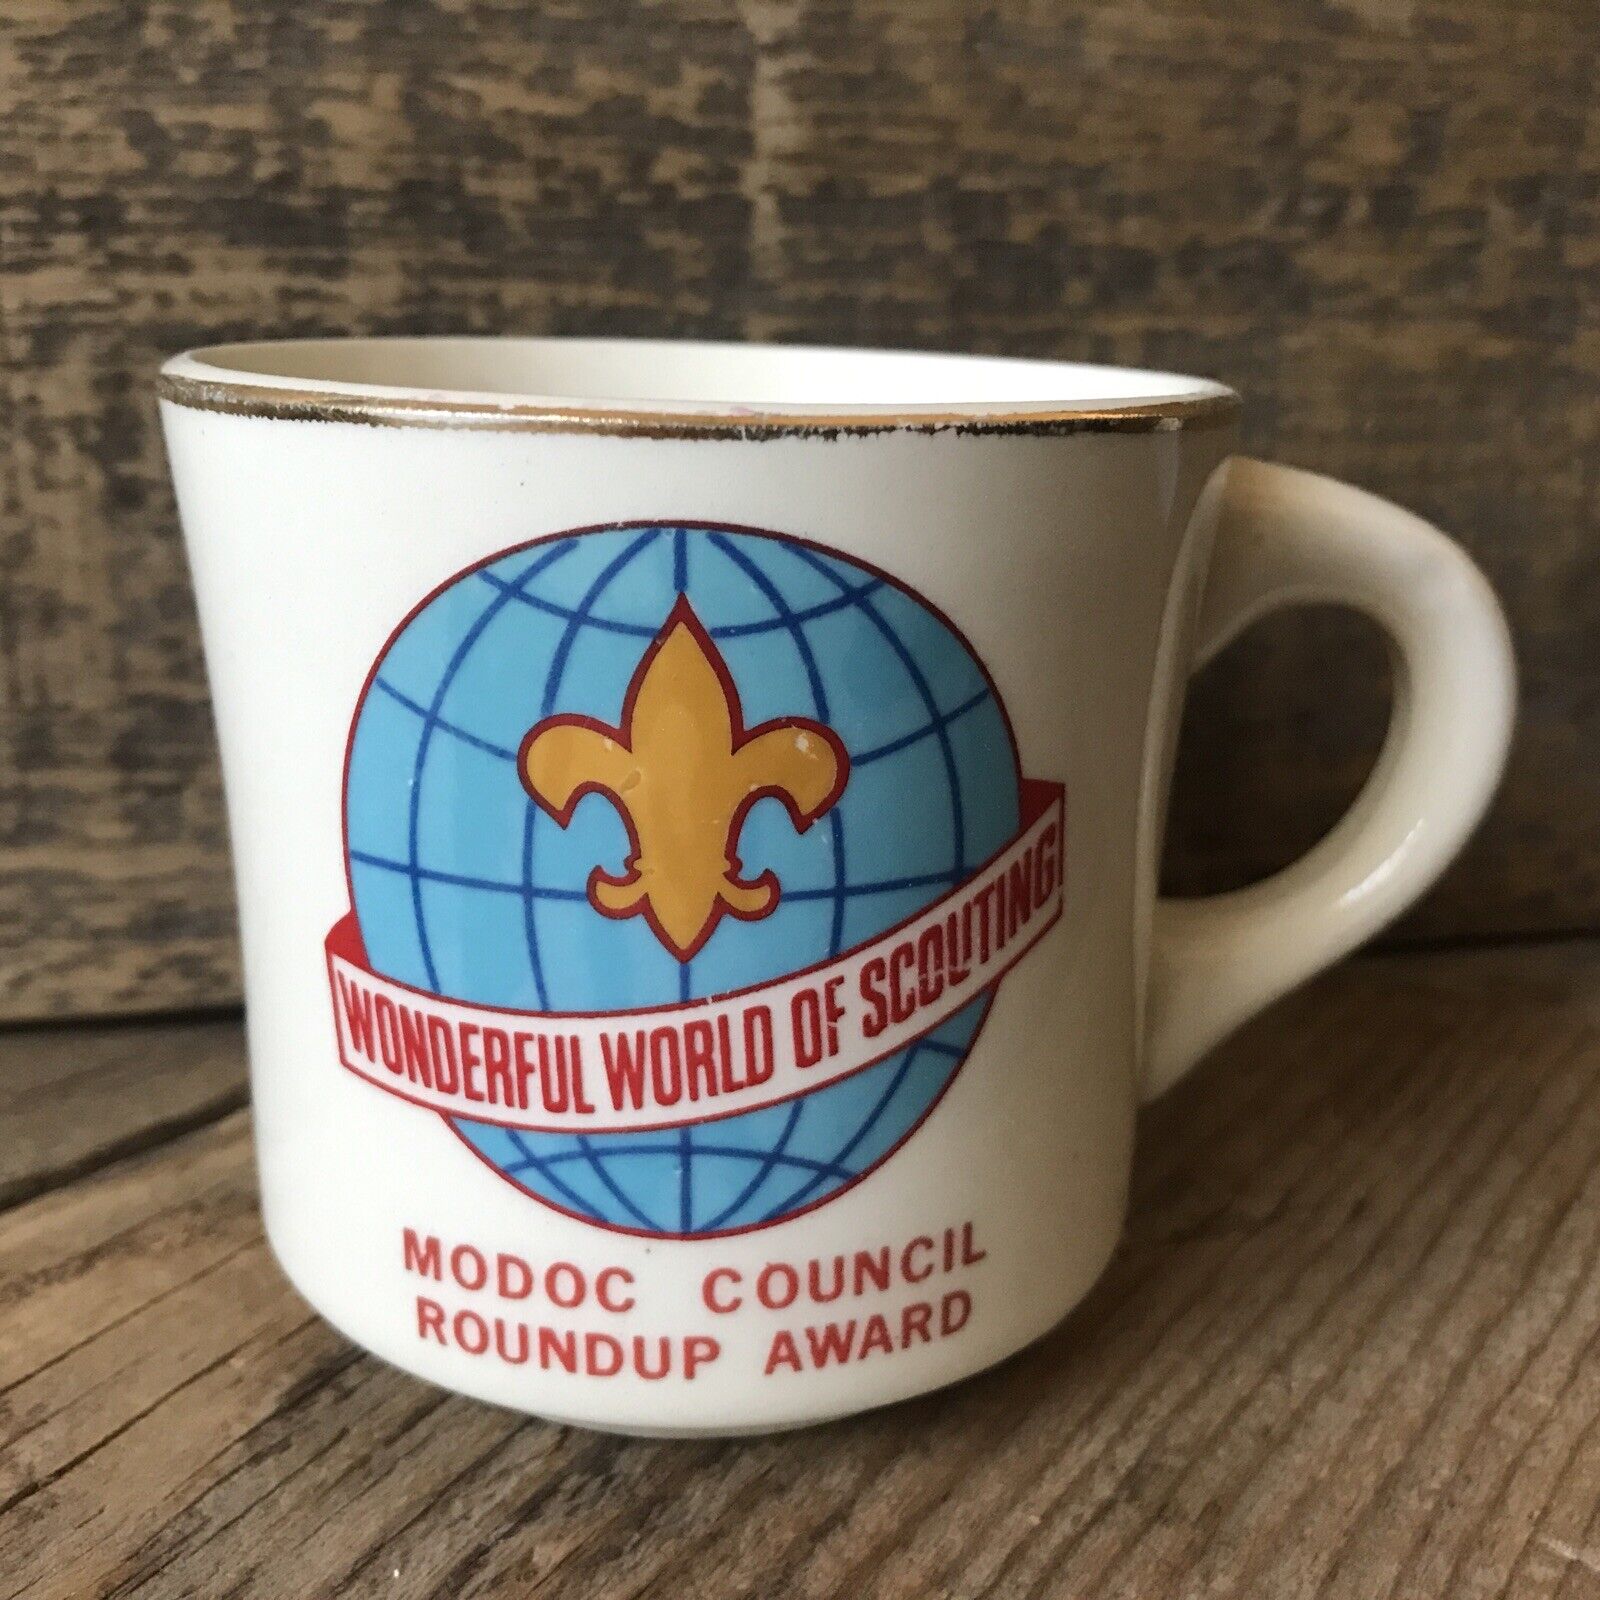 Vintage 70s BSA Boy Scouts of America Modoc Council Roundup Award Ceramic Mug